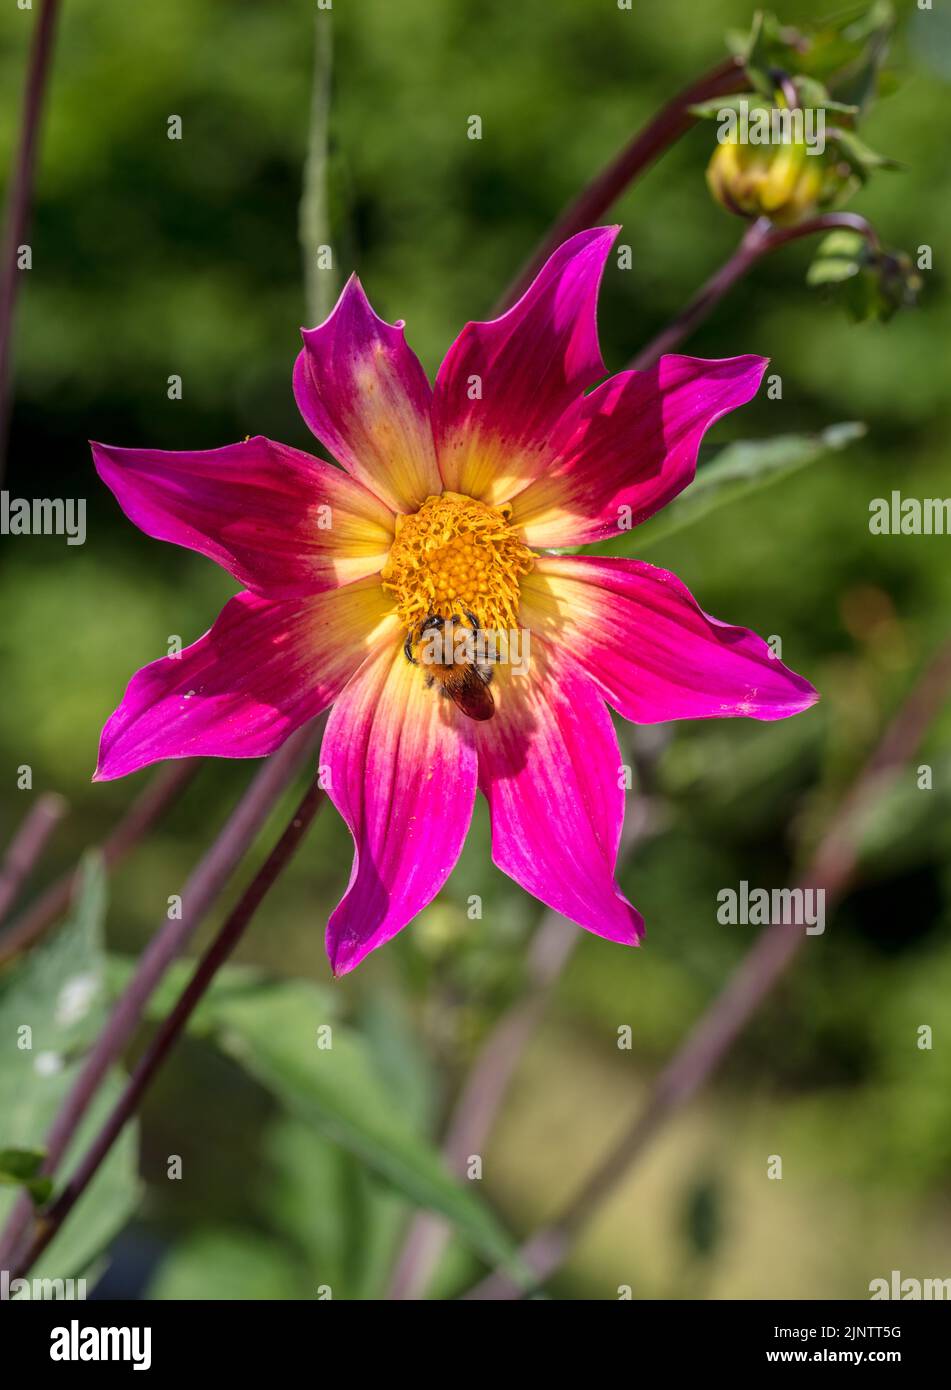 'Bright Eyes' Single Flowered Dahlia, Enkelblommig dahlia (Dahlia x Hortensis) Stock Photo